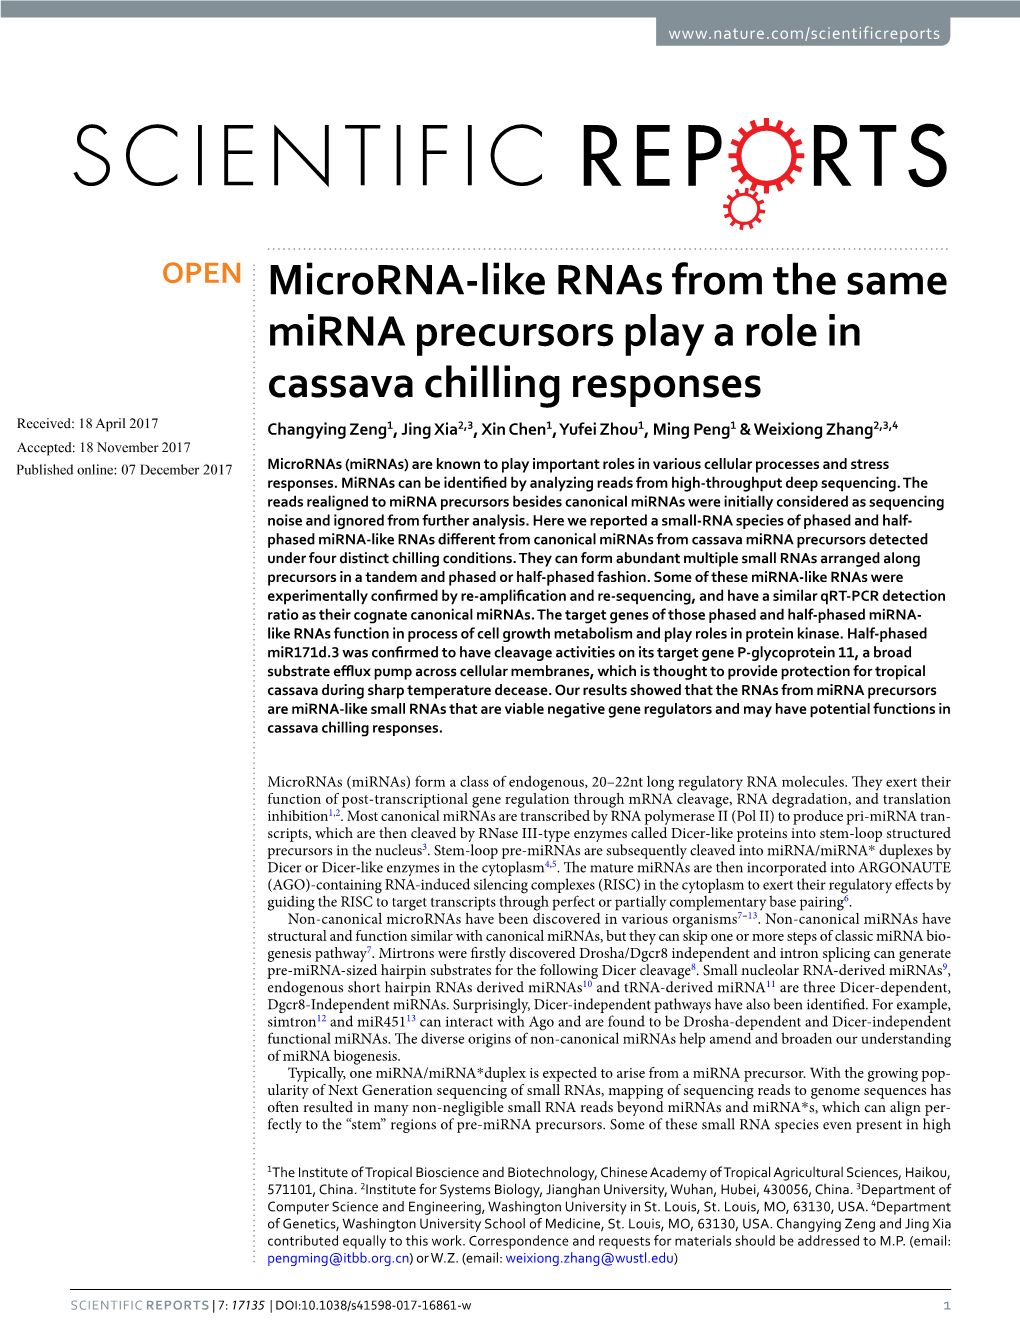 Microrna-Like Rnas from the Same Mirna Precursors Play a Role In